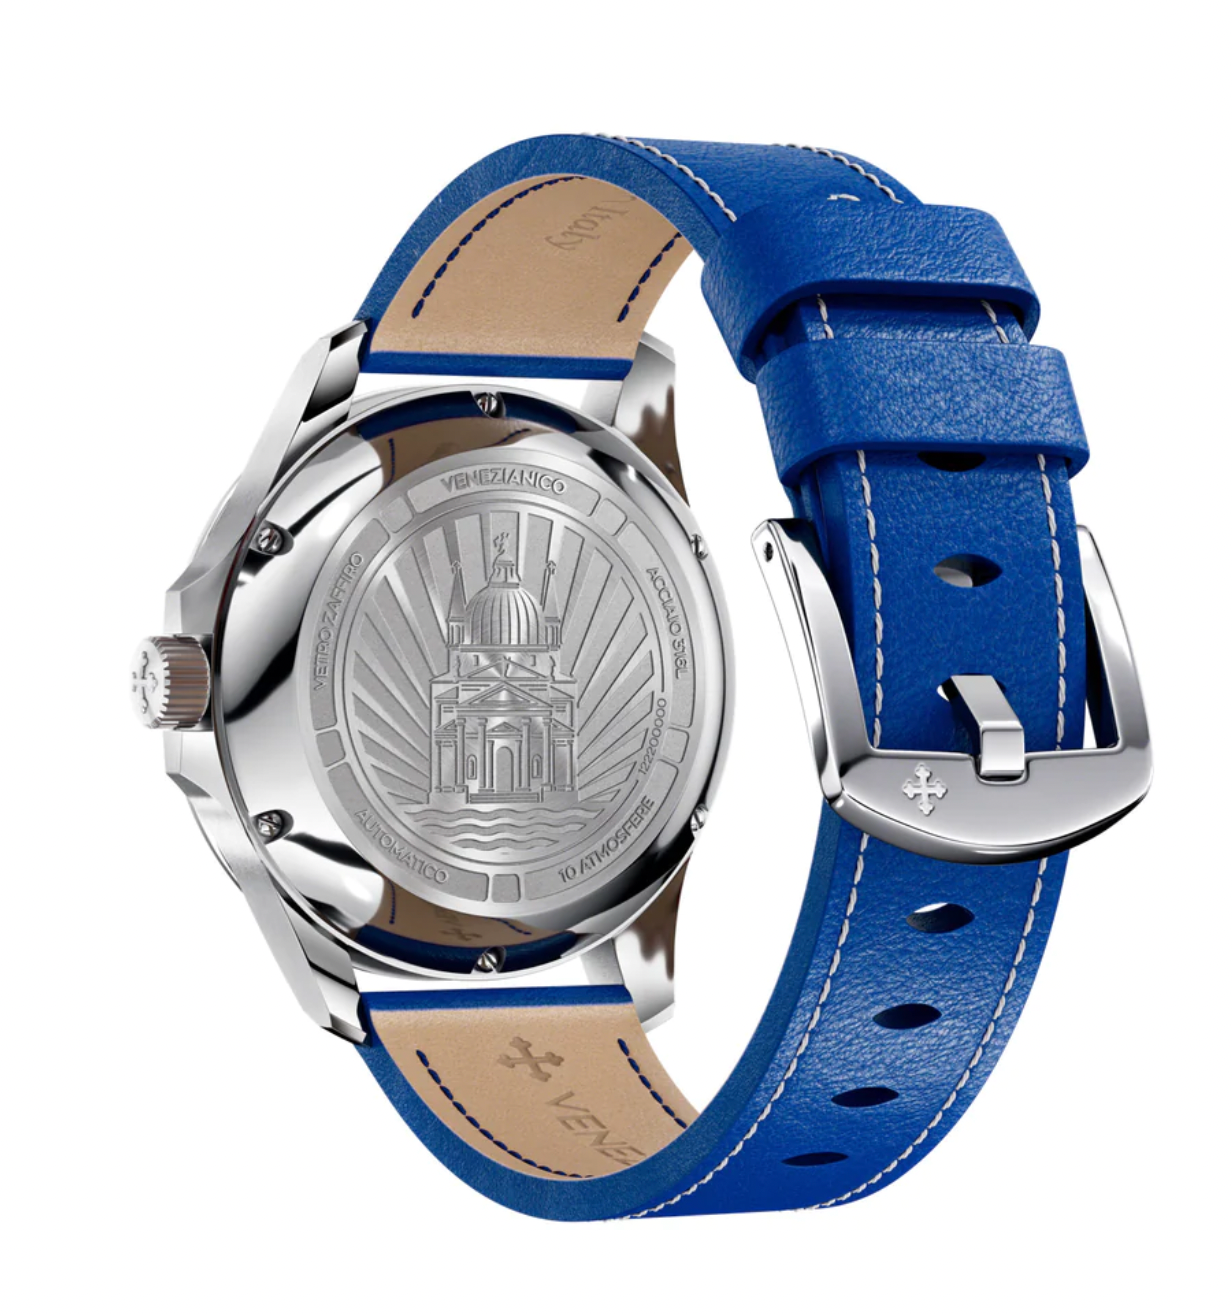 Venezianico Automatic Watch Blue Leather Redentore 40 1221502